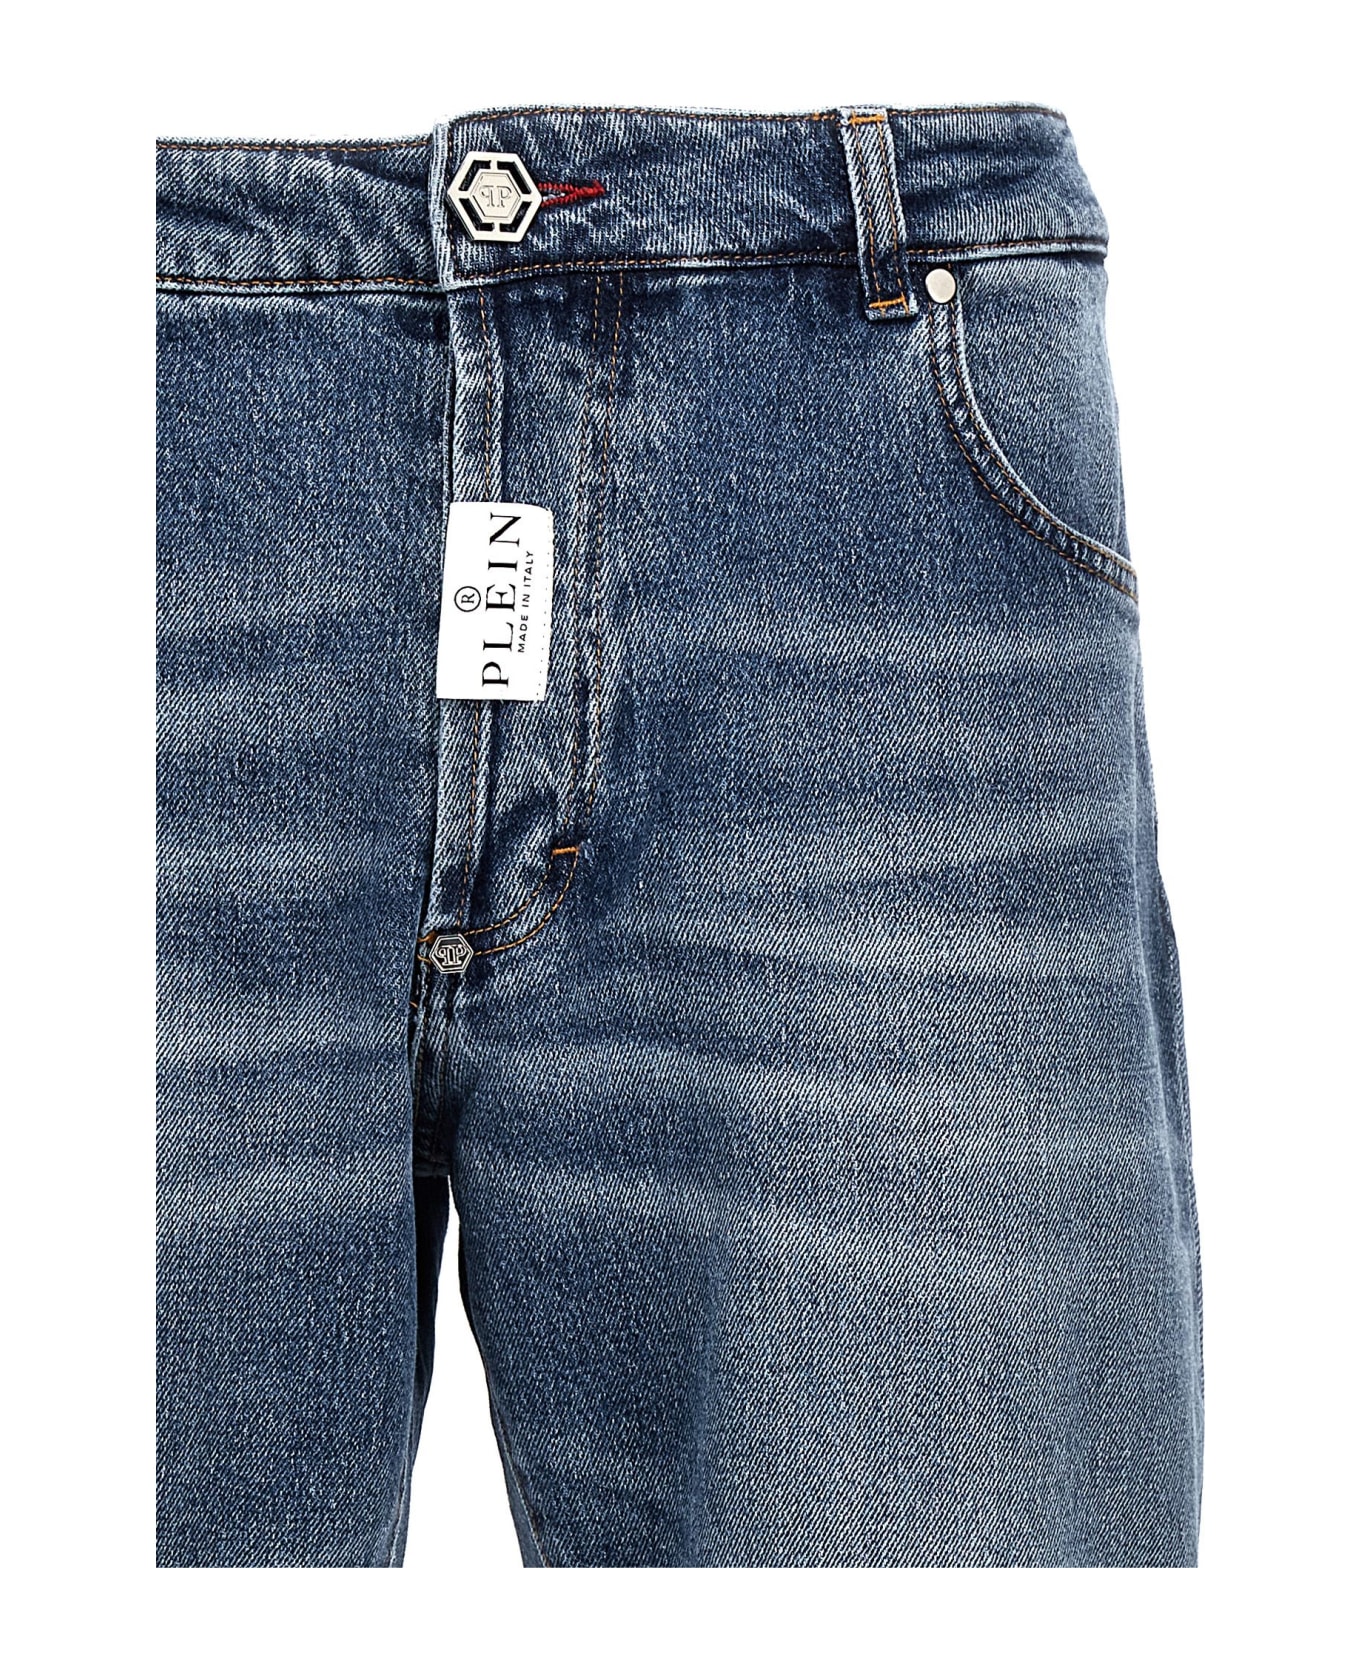 Philipp Plein Denim Jeans - Blu lavato デニム